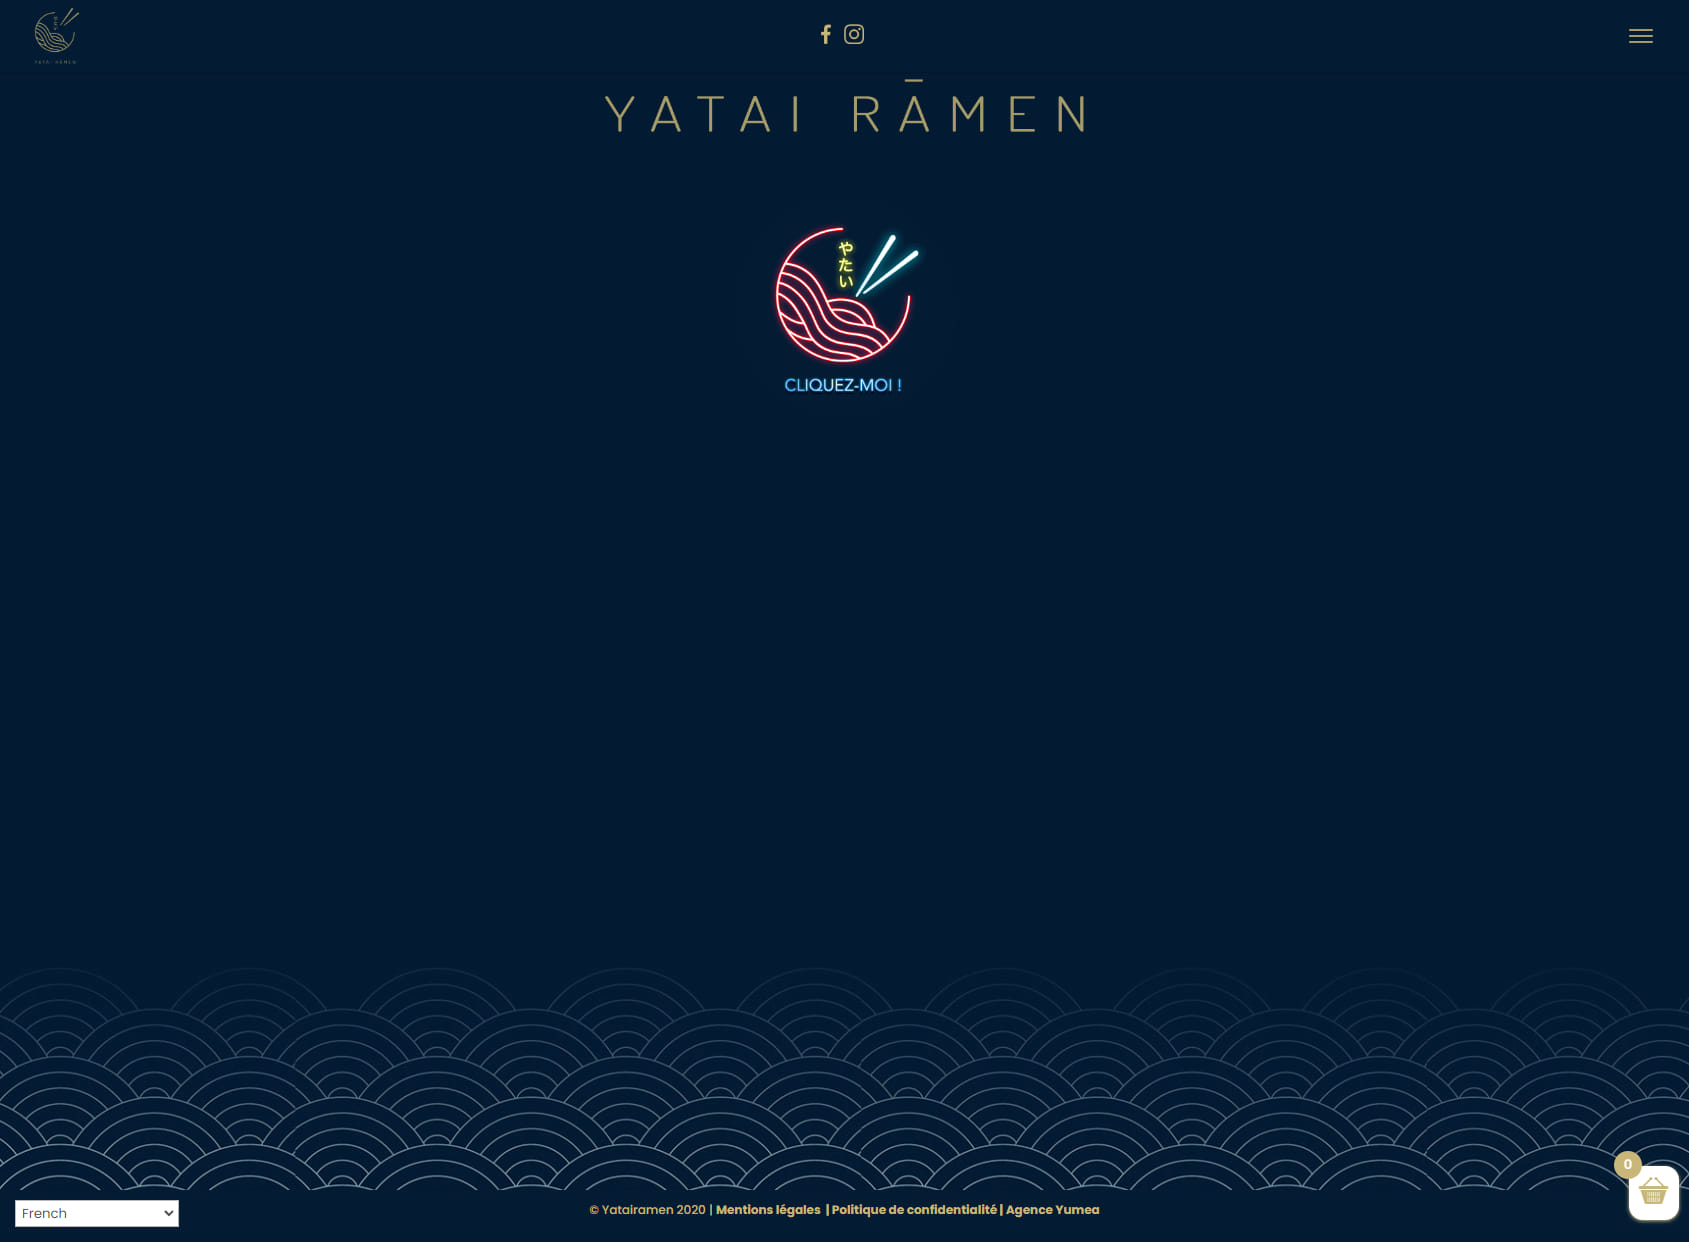 Yatai Ramen Saint honoré